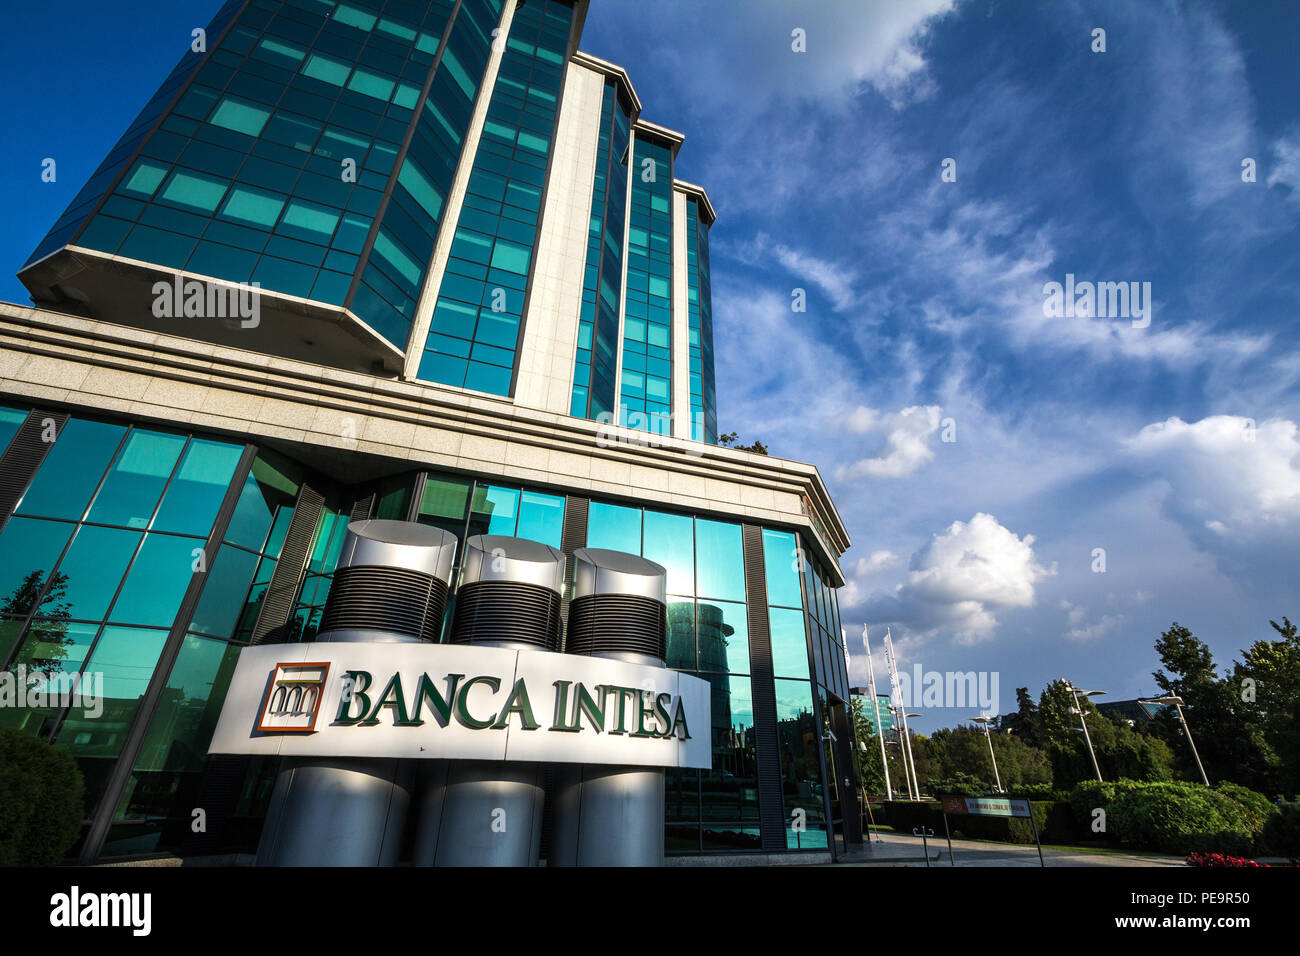 Banca intesa hi-res stock photography and images - Alamy